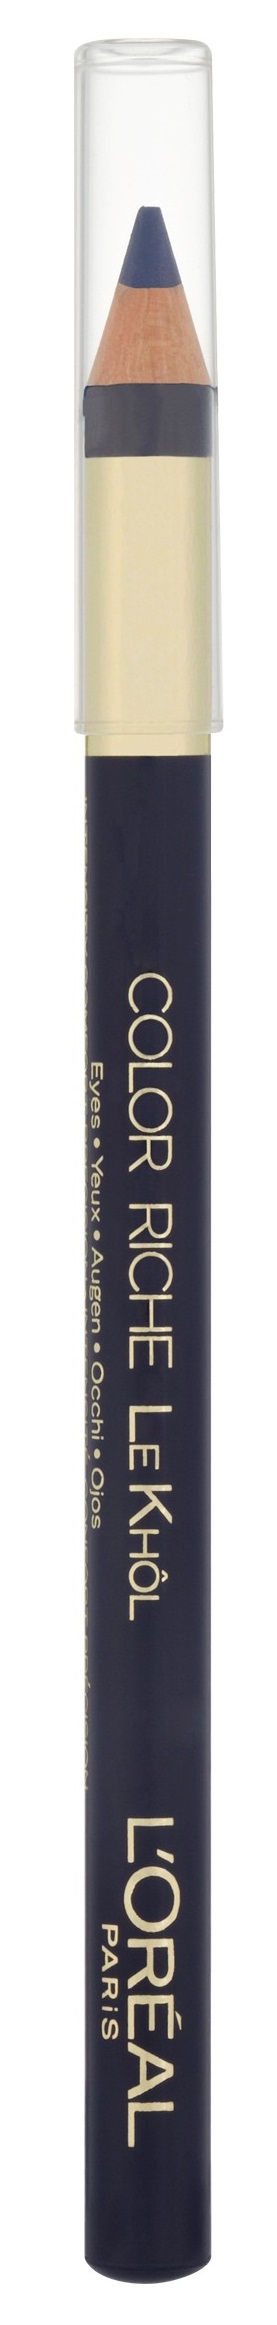 Карандаш для глаз L'Oreal Paris COLOR RICHE 107 Deep Sea Blue карандаш для губ l oreal paris color riche 302 bois de ros